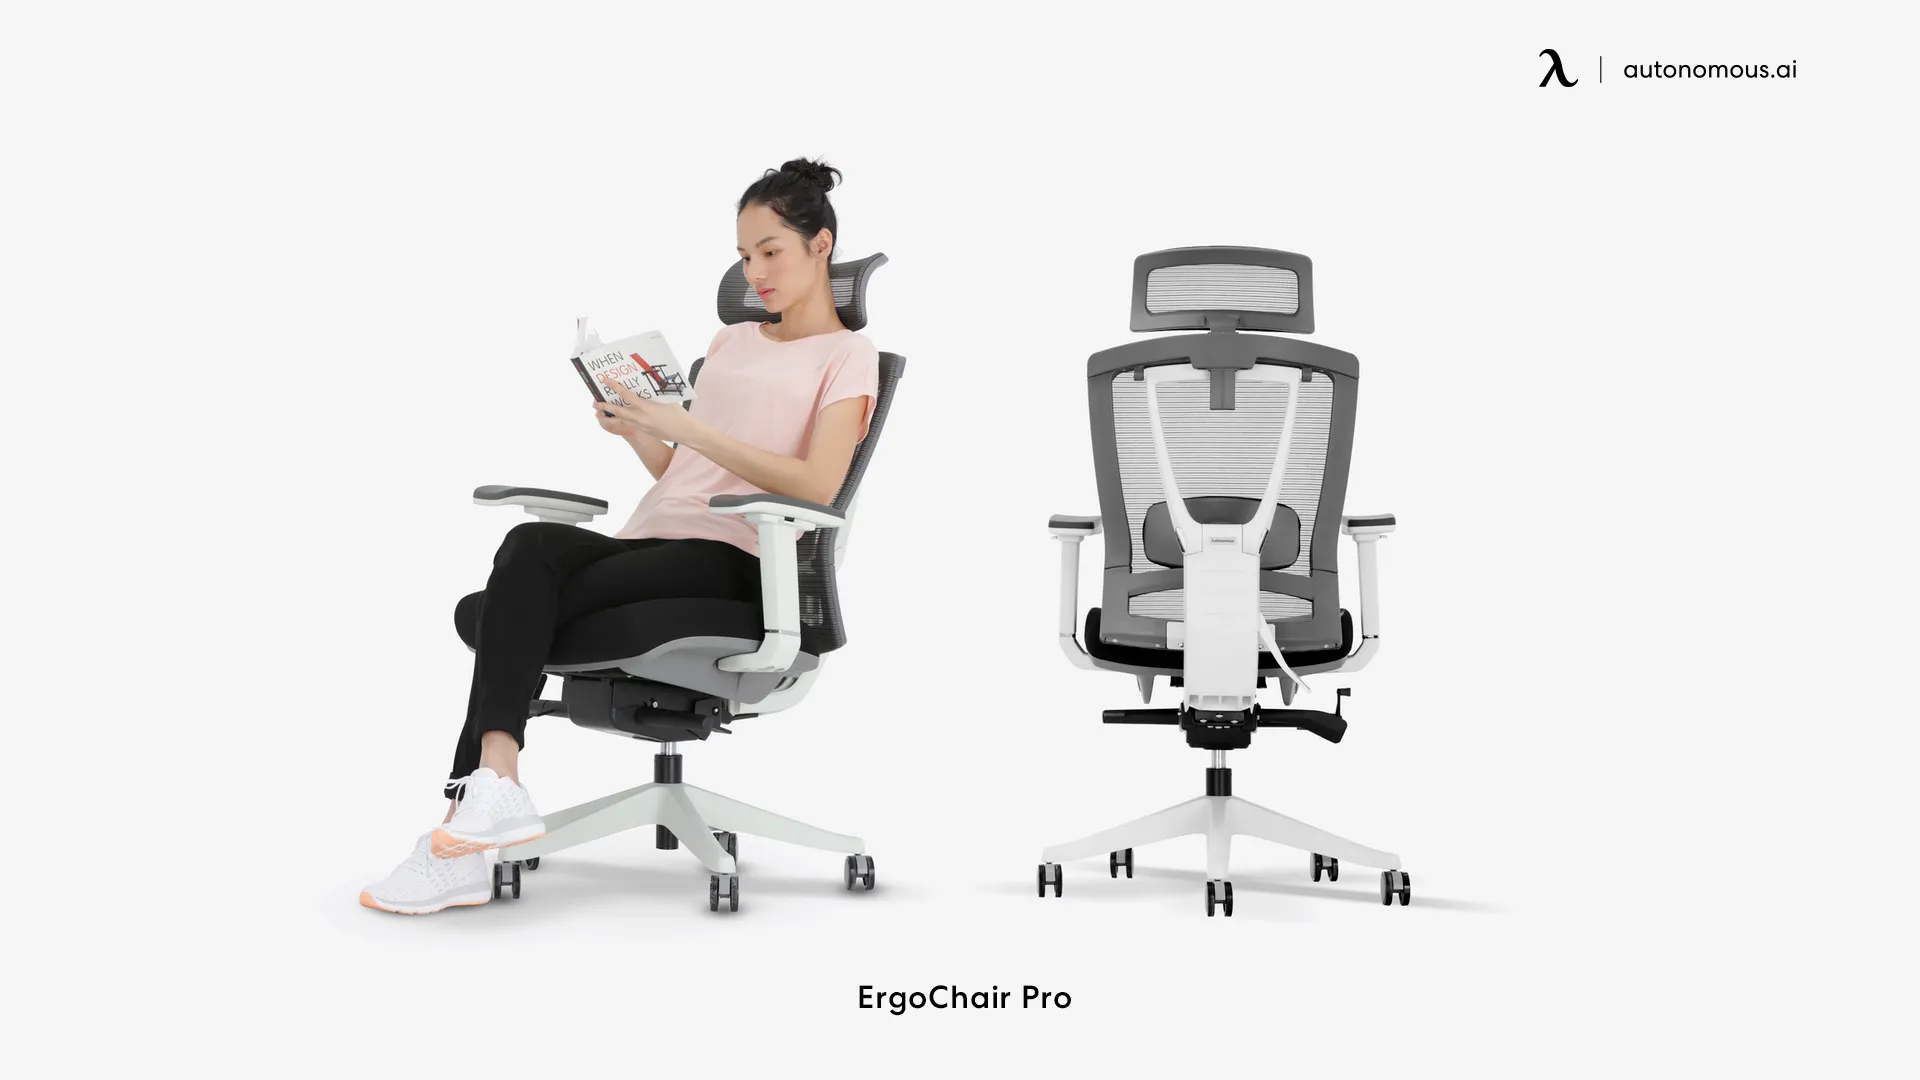 ErgoChair Pro - ergonomic comfort design